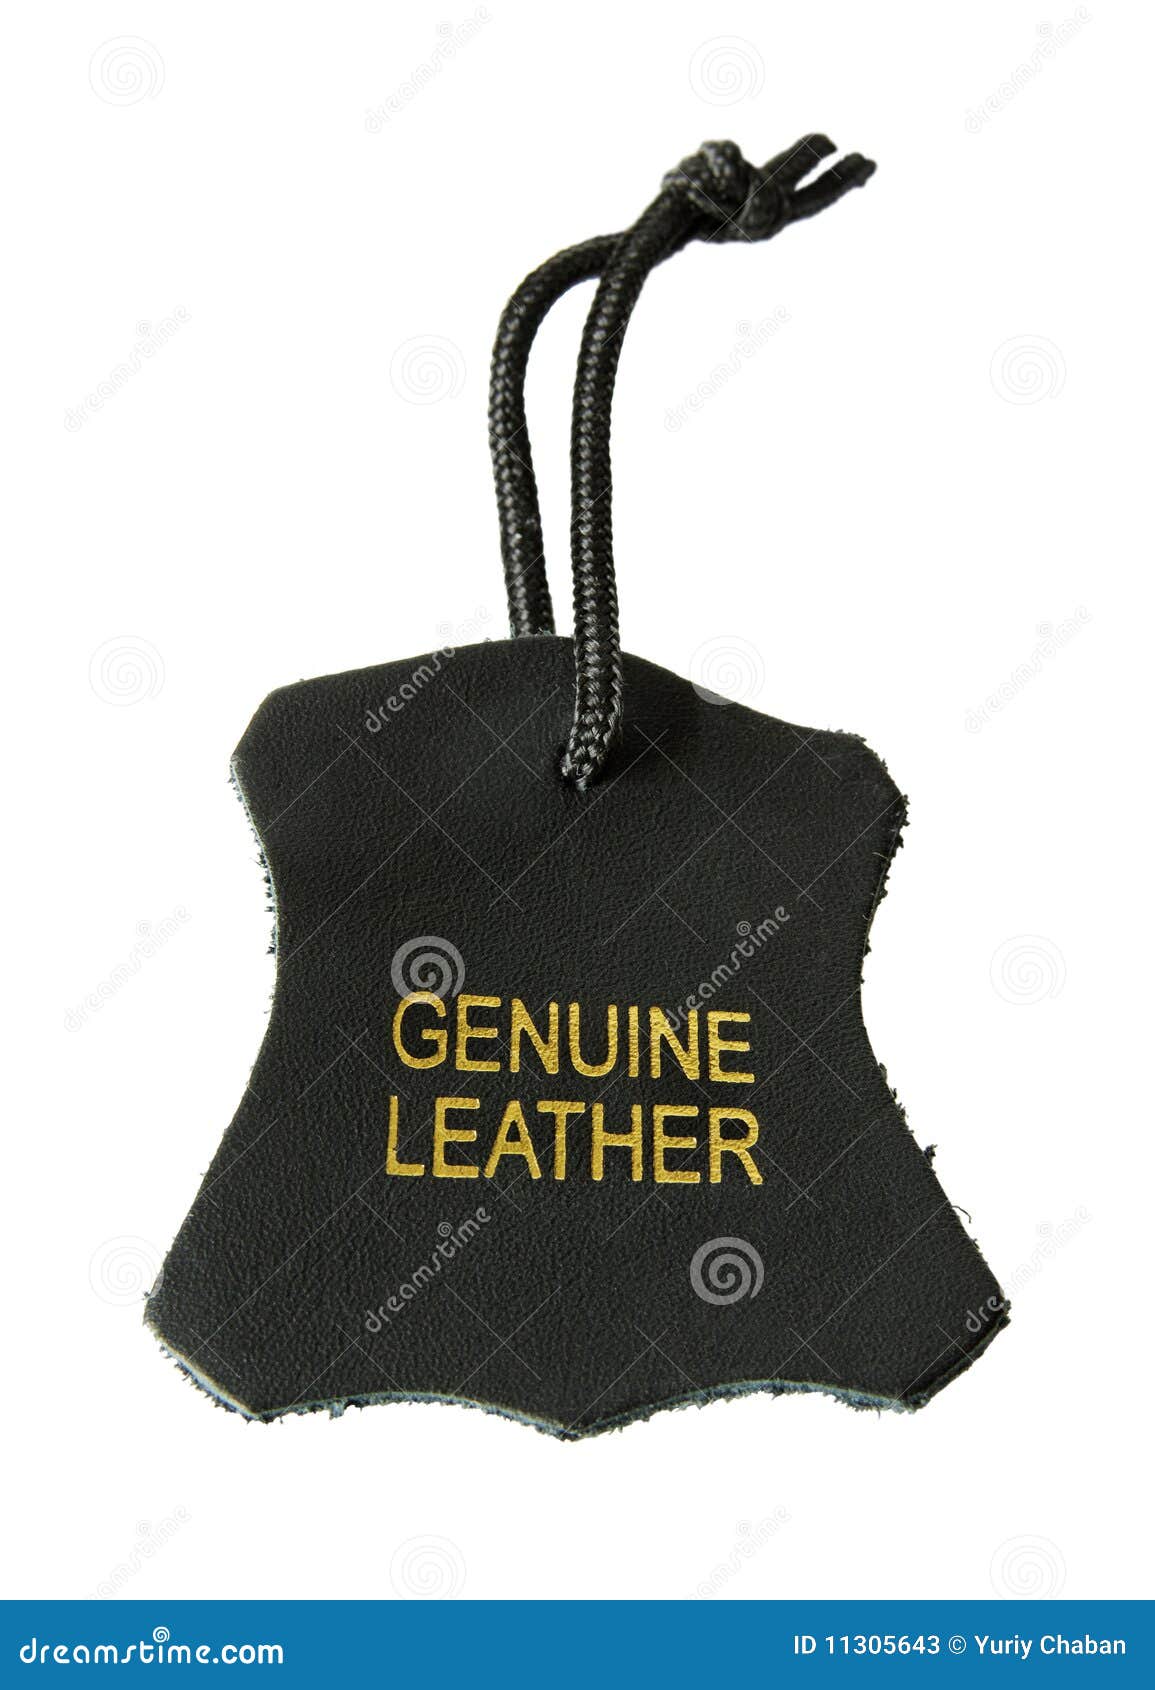 genuine leather label